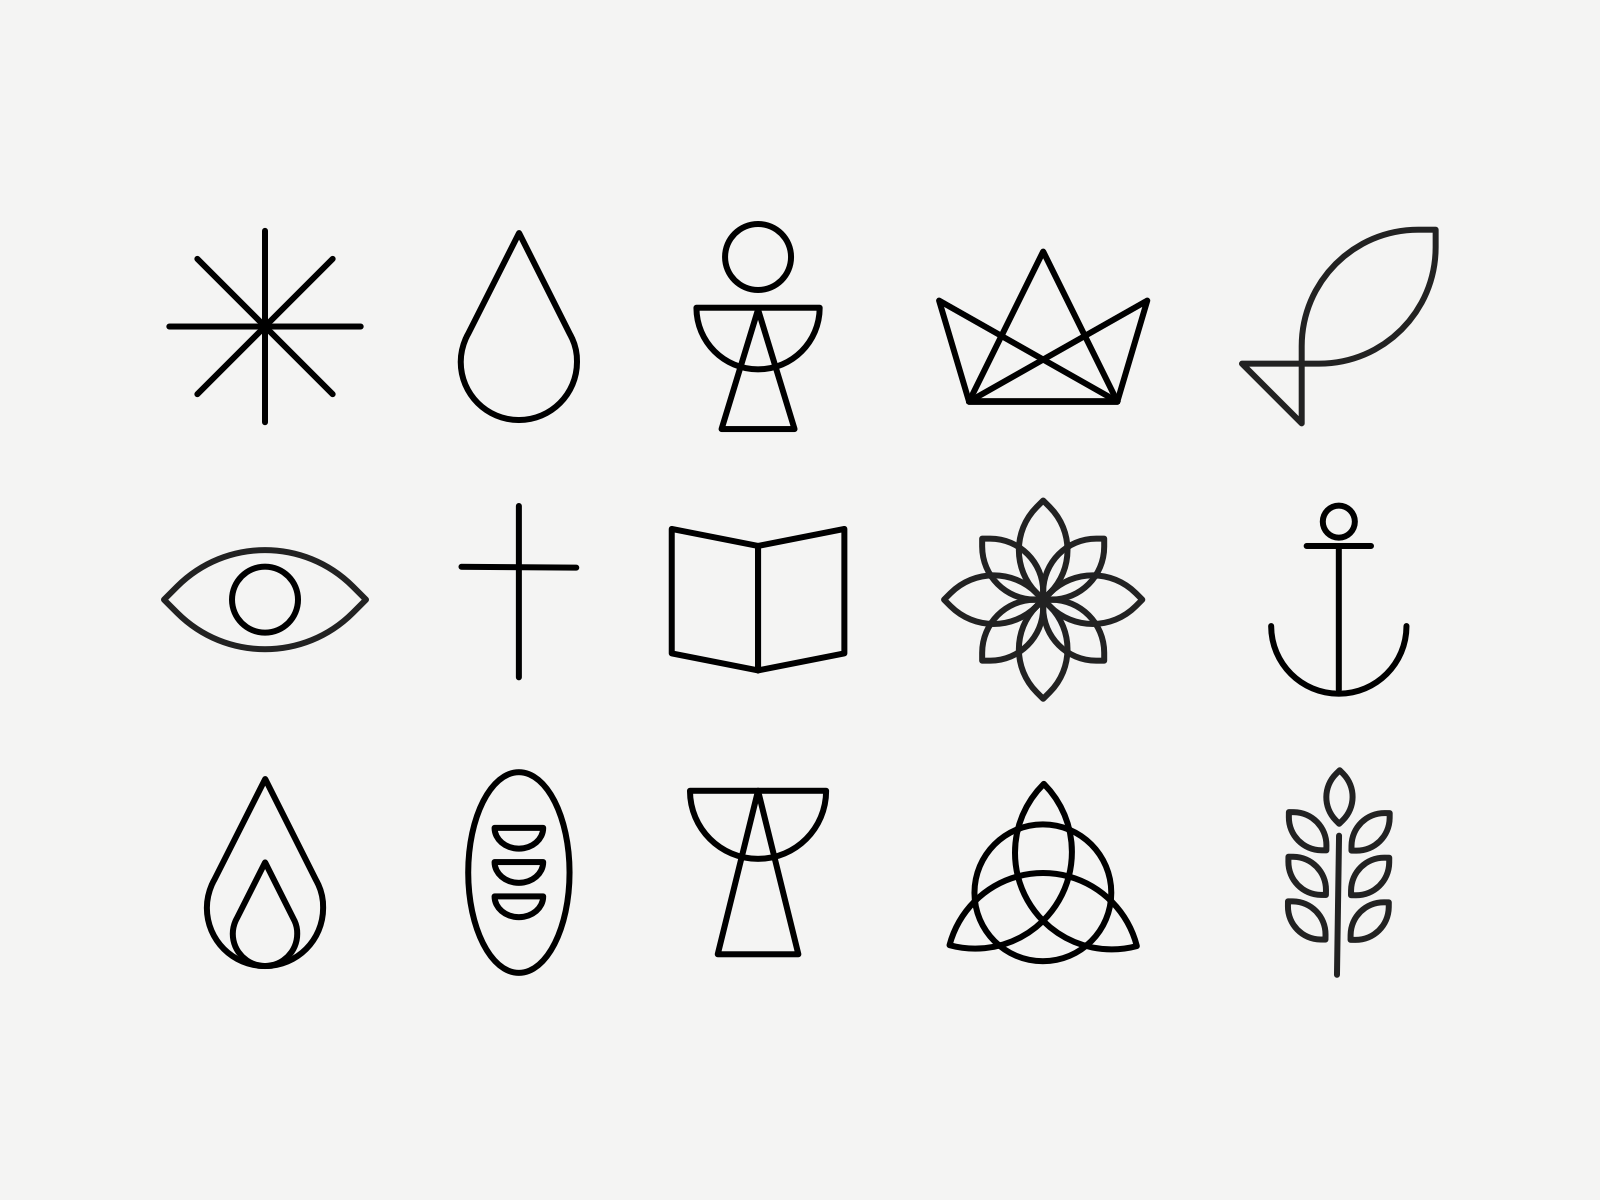 55 Beautiful Religious Tattoo Designs